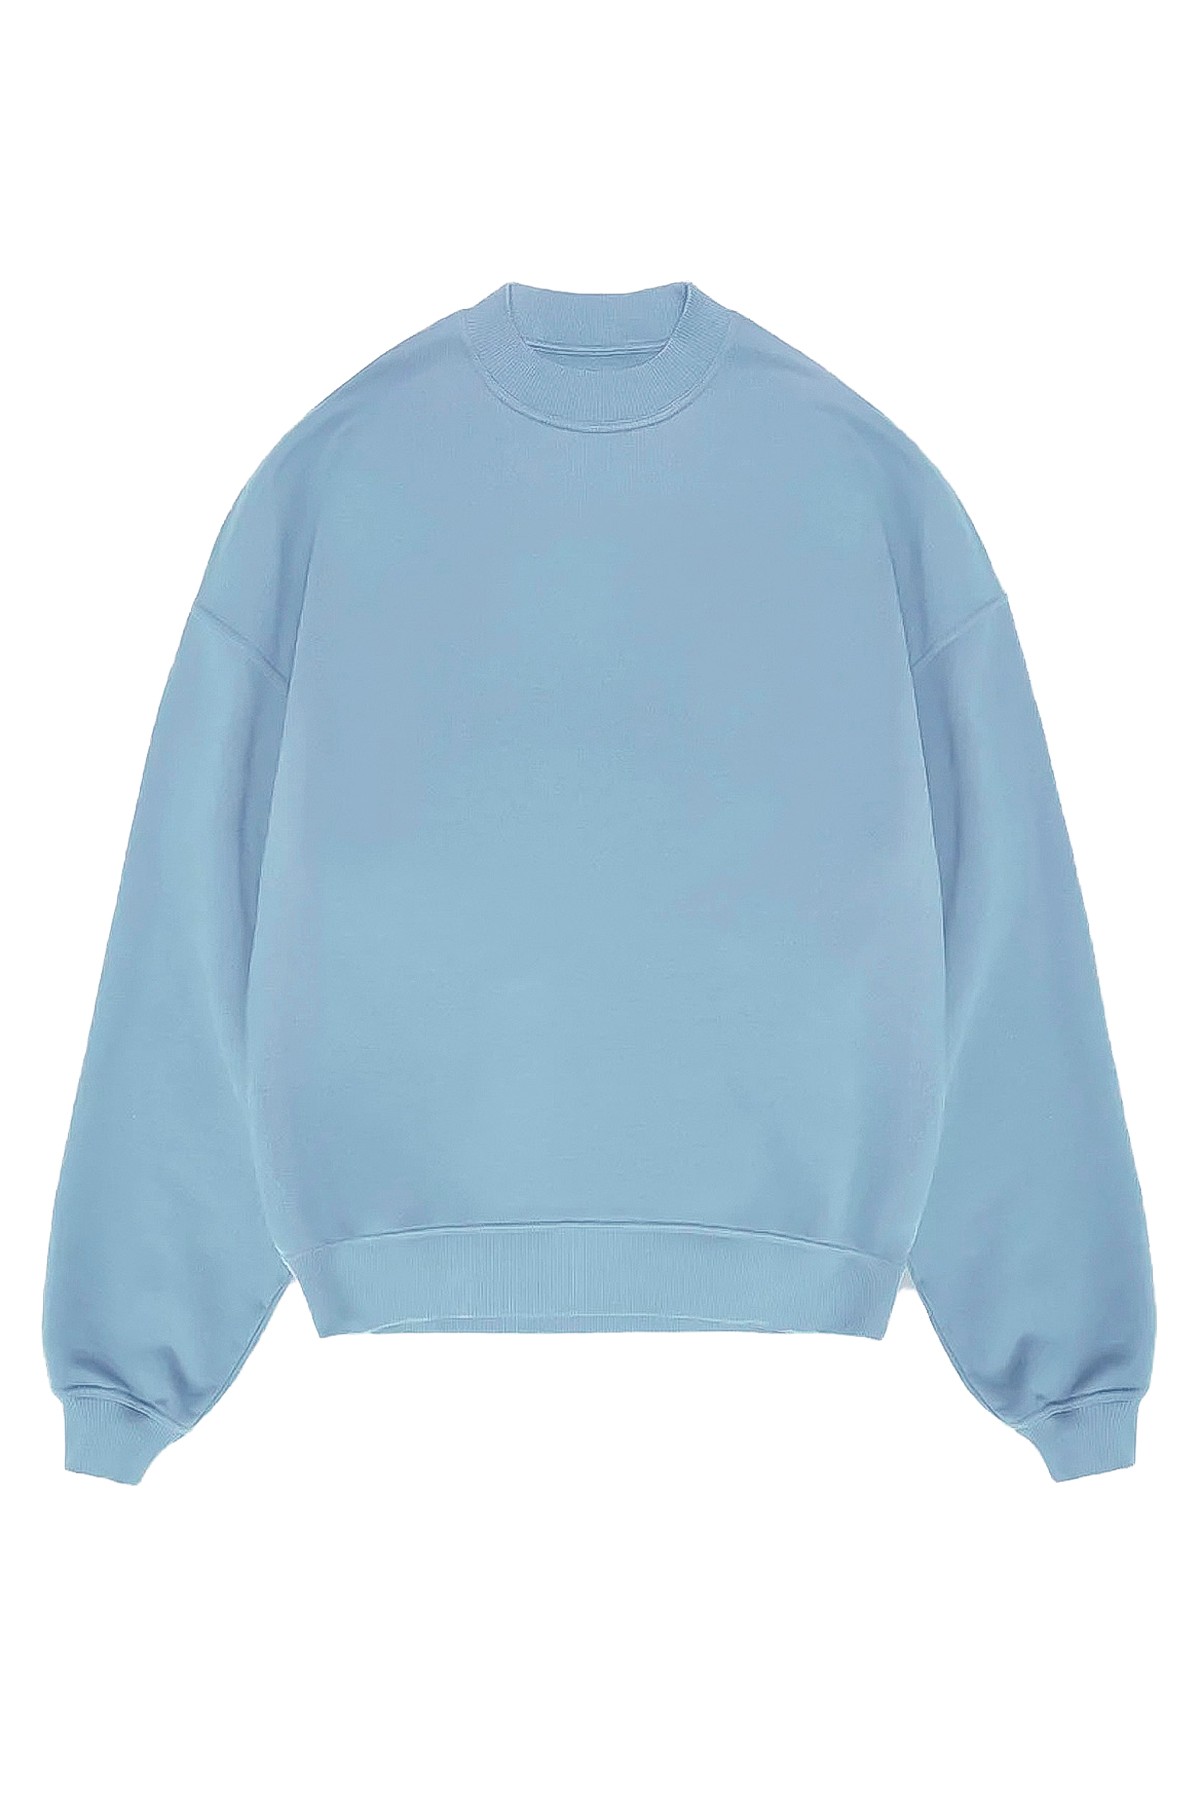 Jeu - Oversize Sweatshirt - BABY BLUE